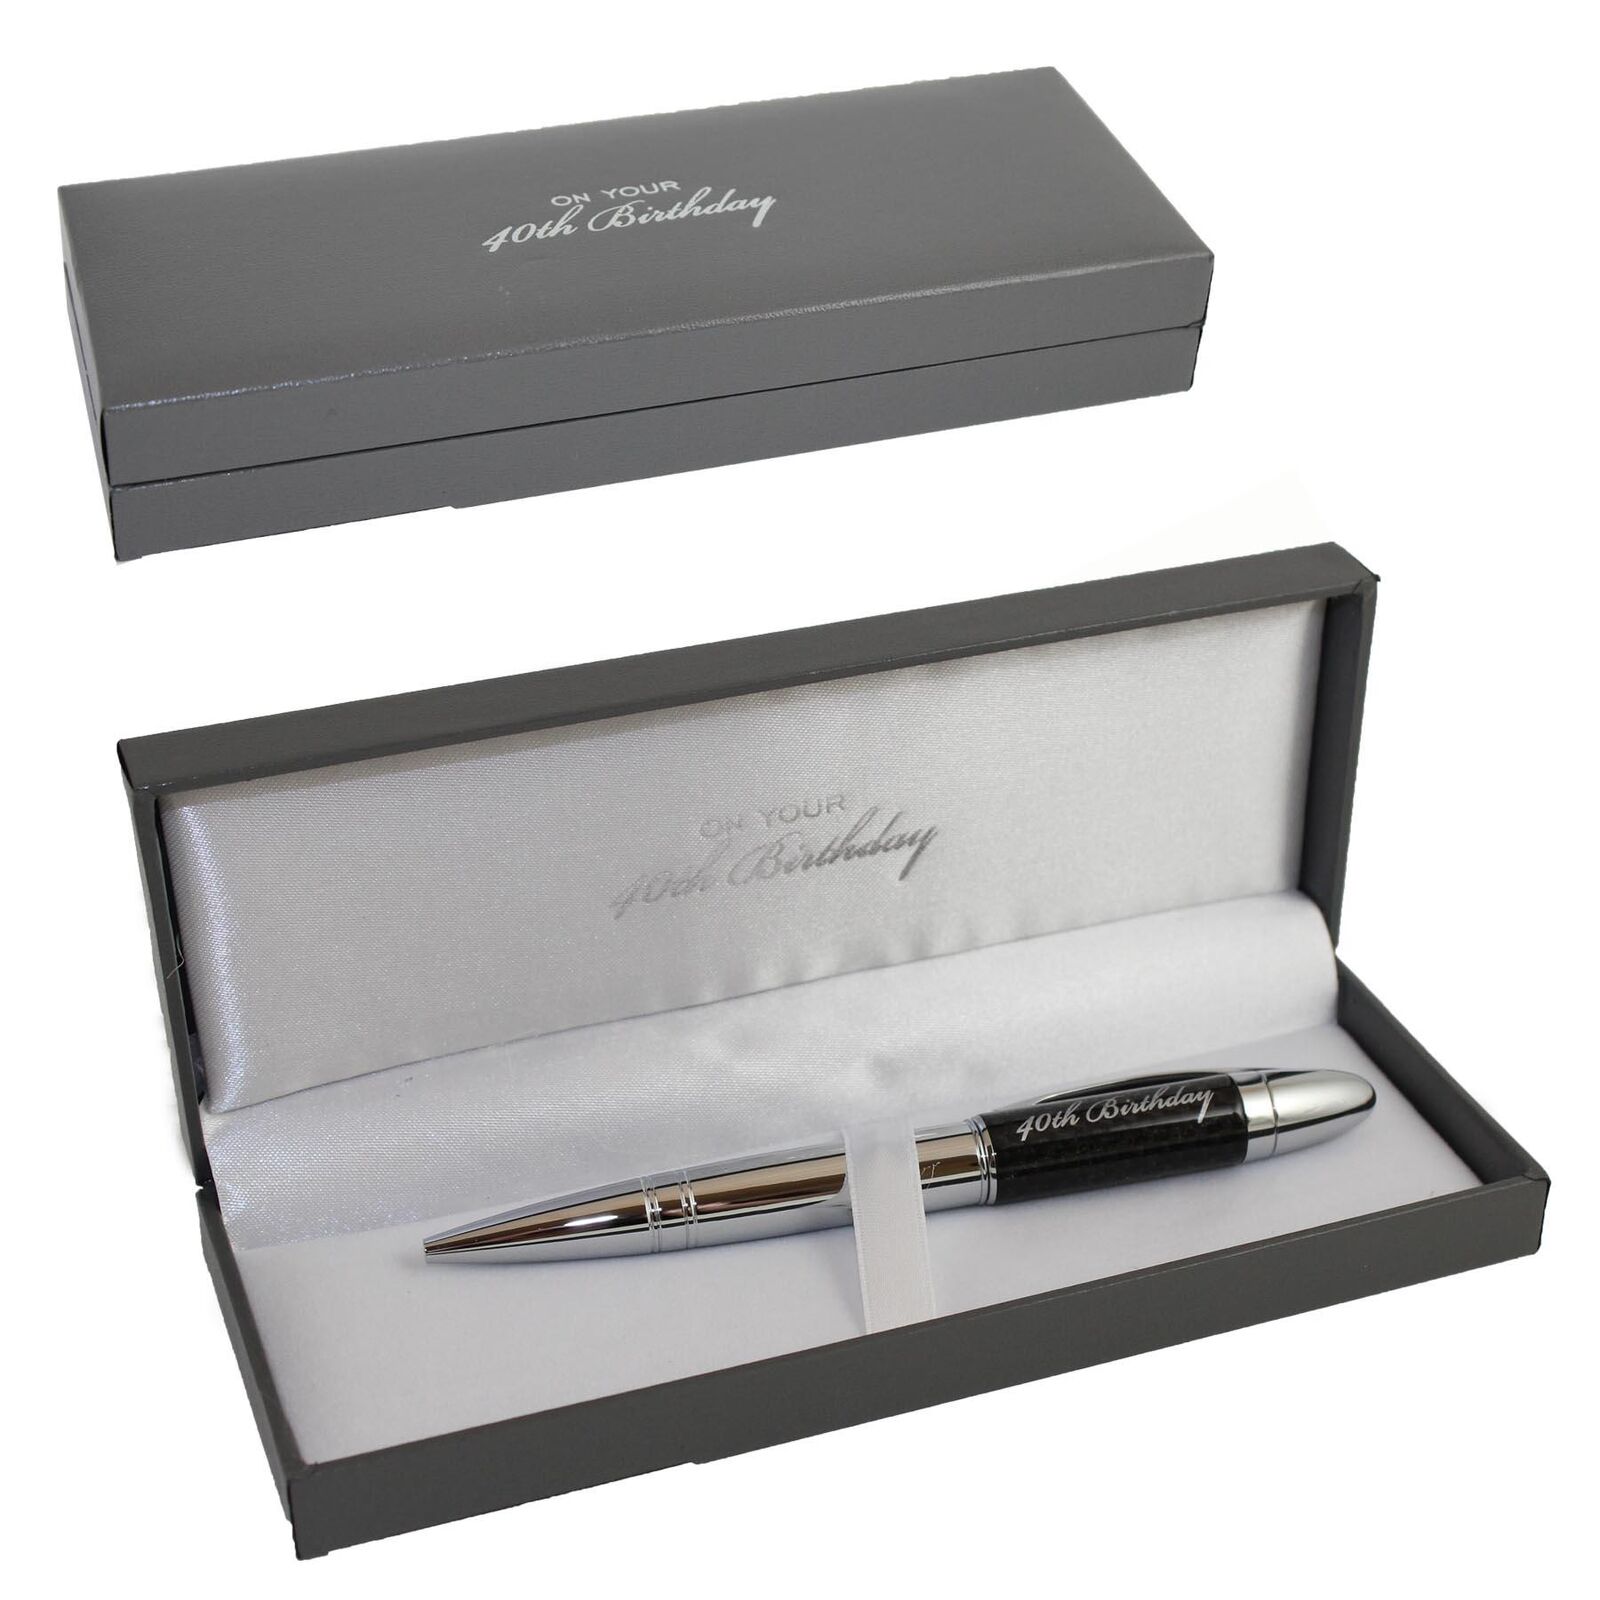 Stunning Birthday Pen in Gift Boxed - 